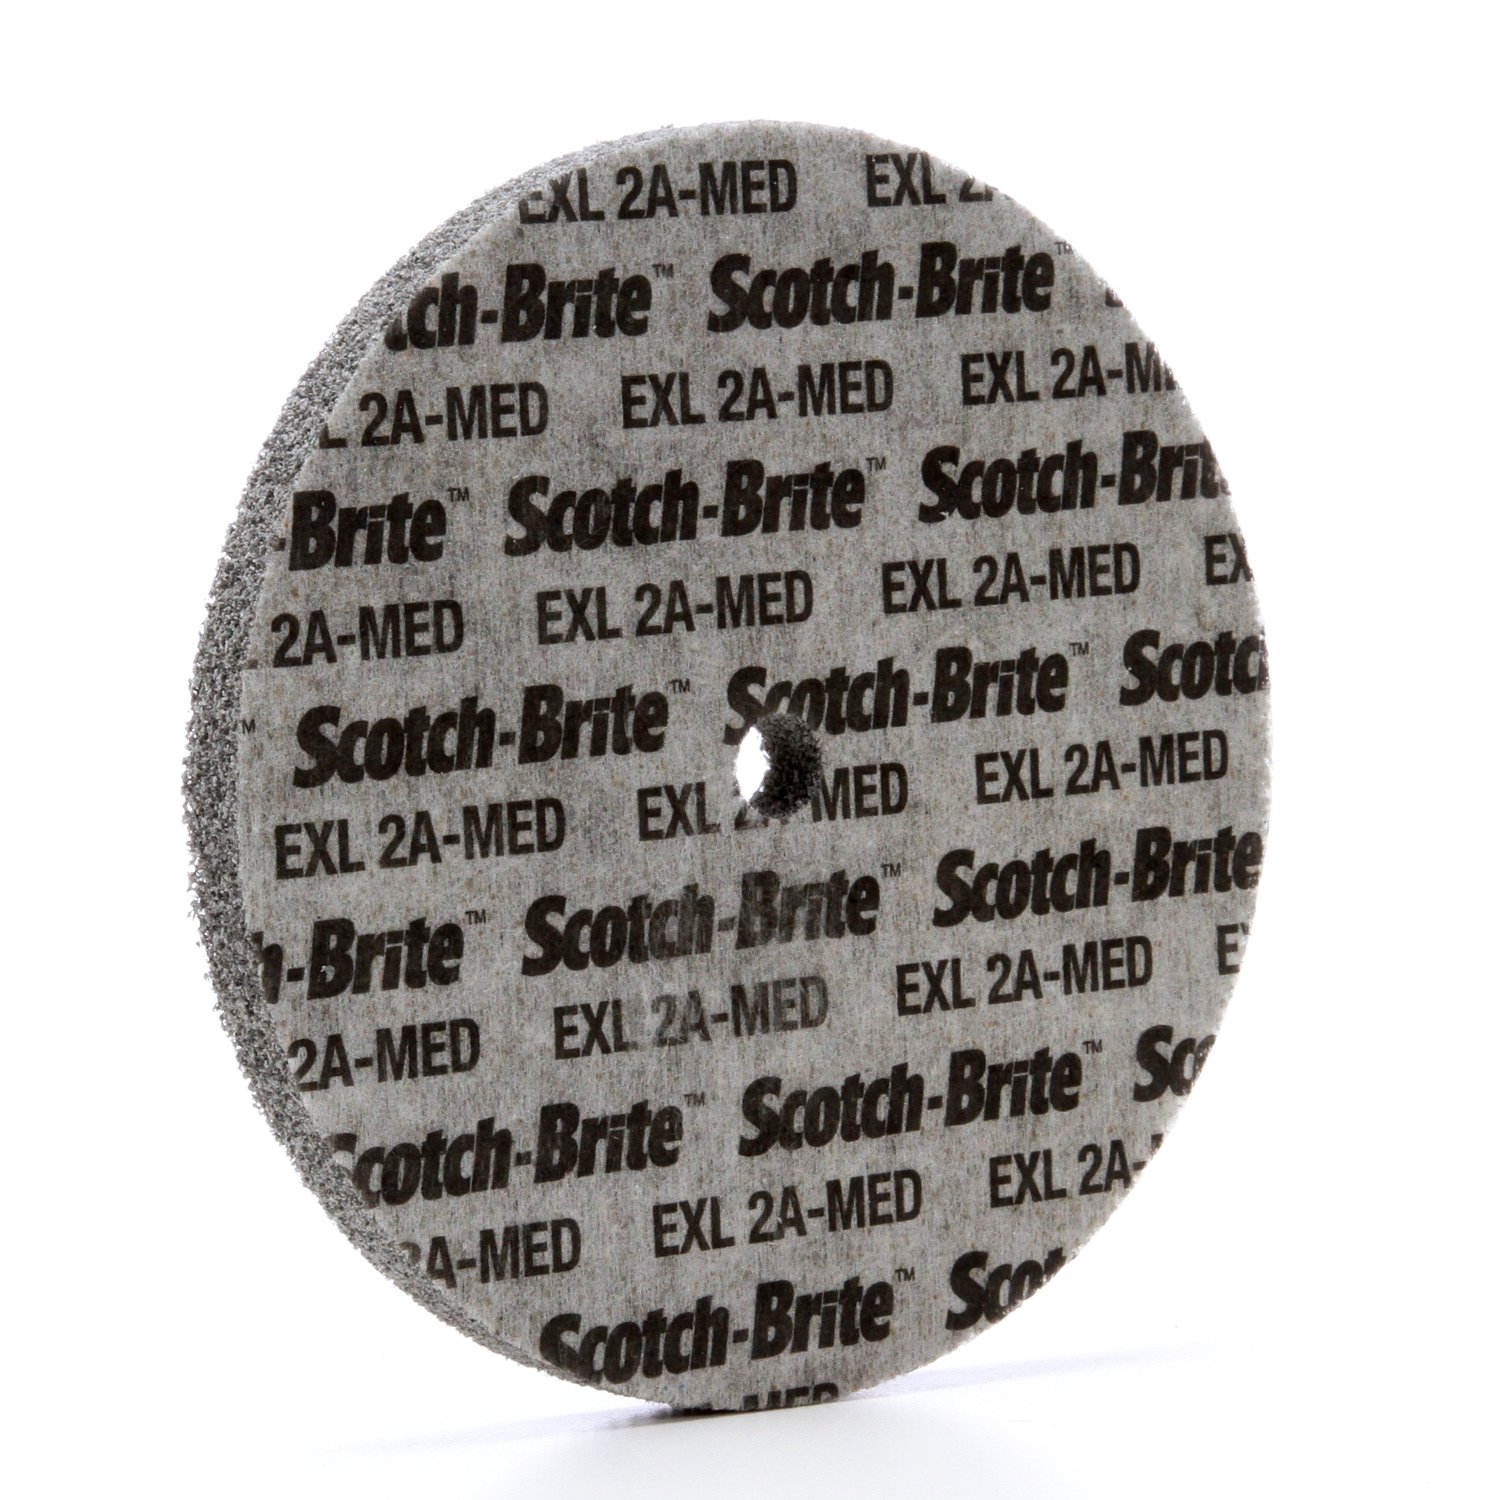 7100188542 - Scotch-Brite EXL Unitized Wheel, XL-UW, 2A Medium, 6 in x 1/2 in x 1/2
in, SPR21376A, 4 ea/Case, Custom